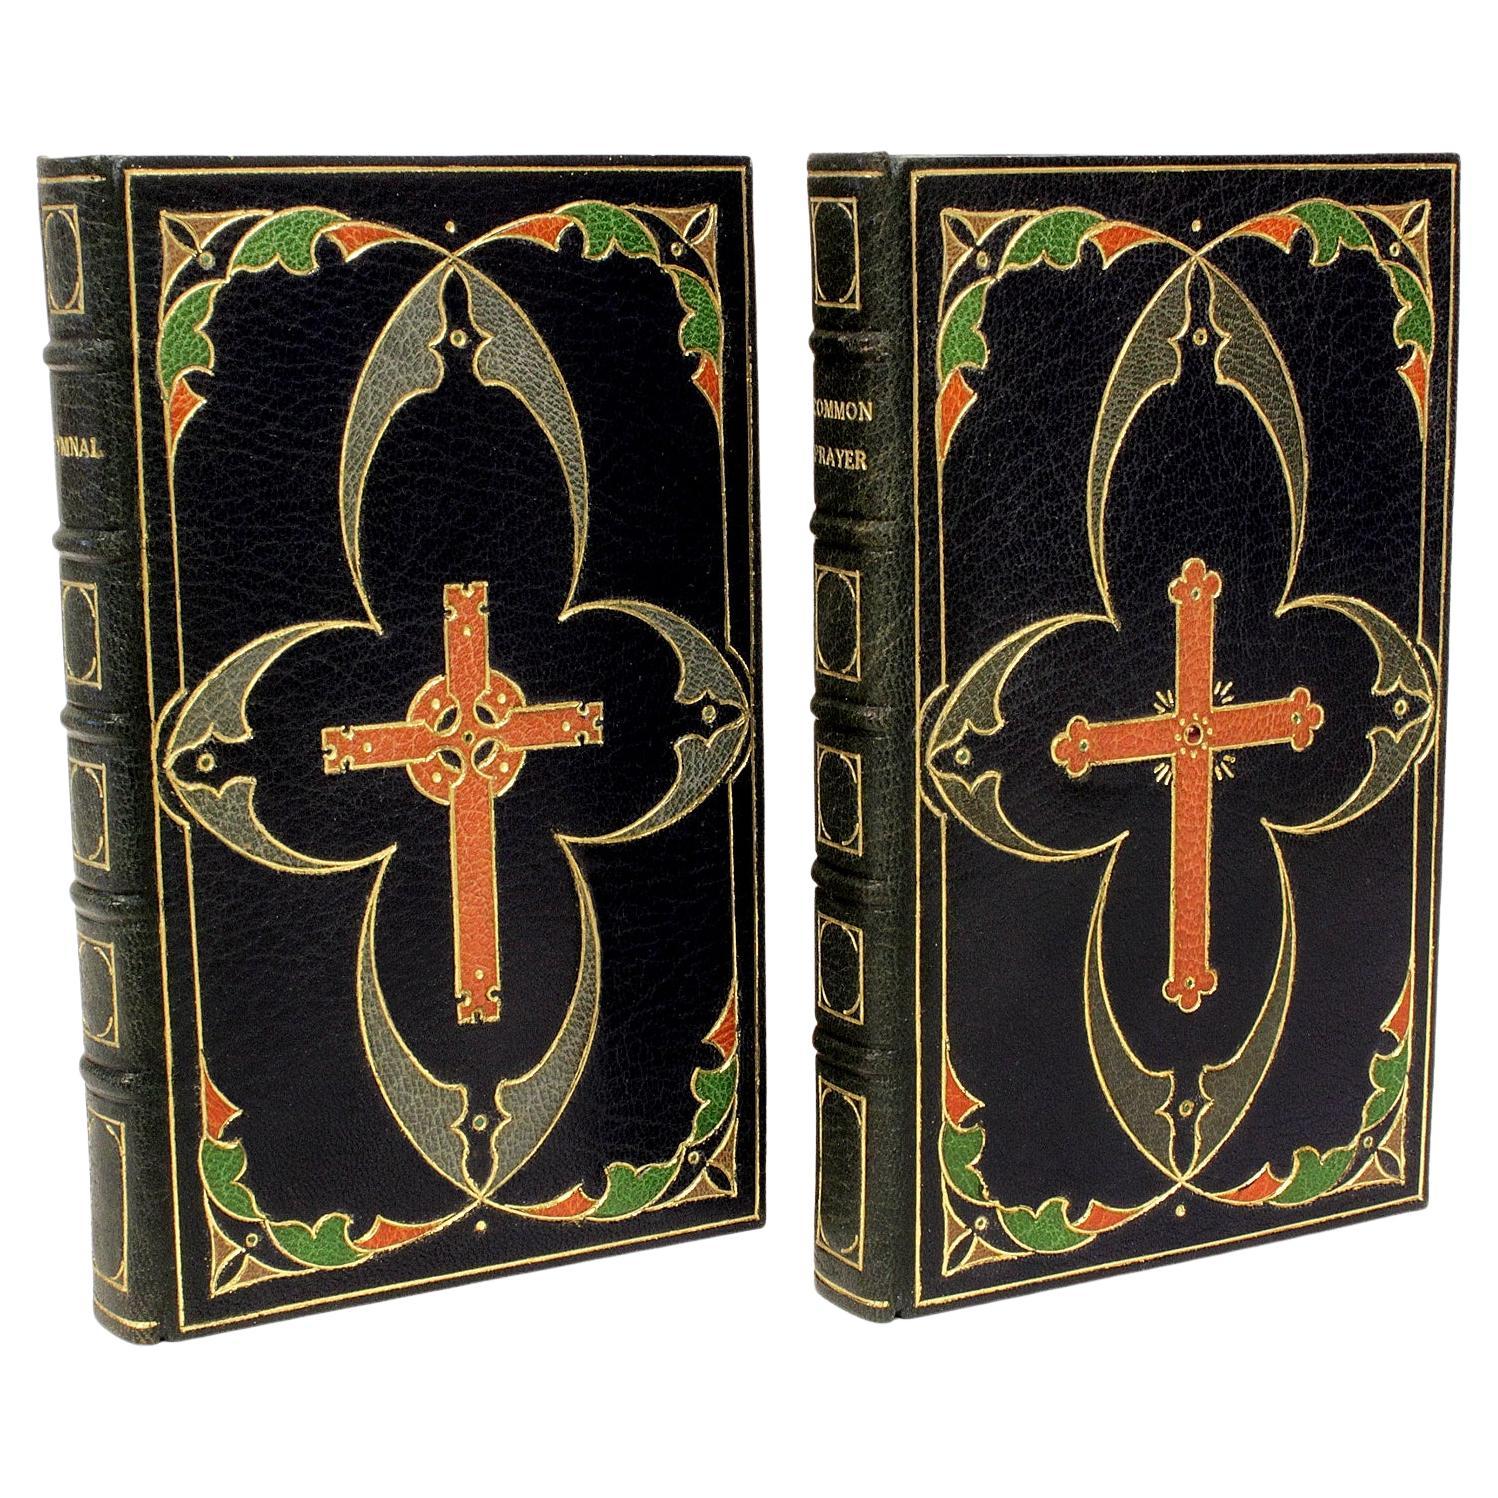 Book of Common Prayer / Hymnal, 2 Vols., Elaboratly Leather Bound by Grabau